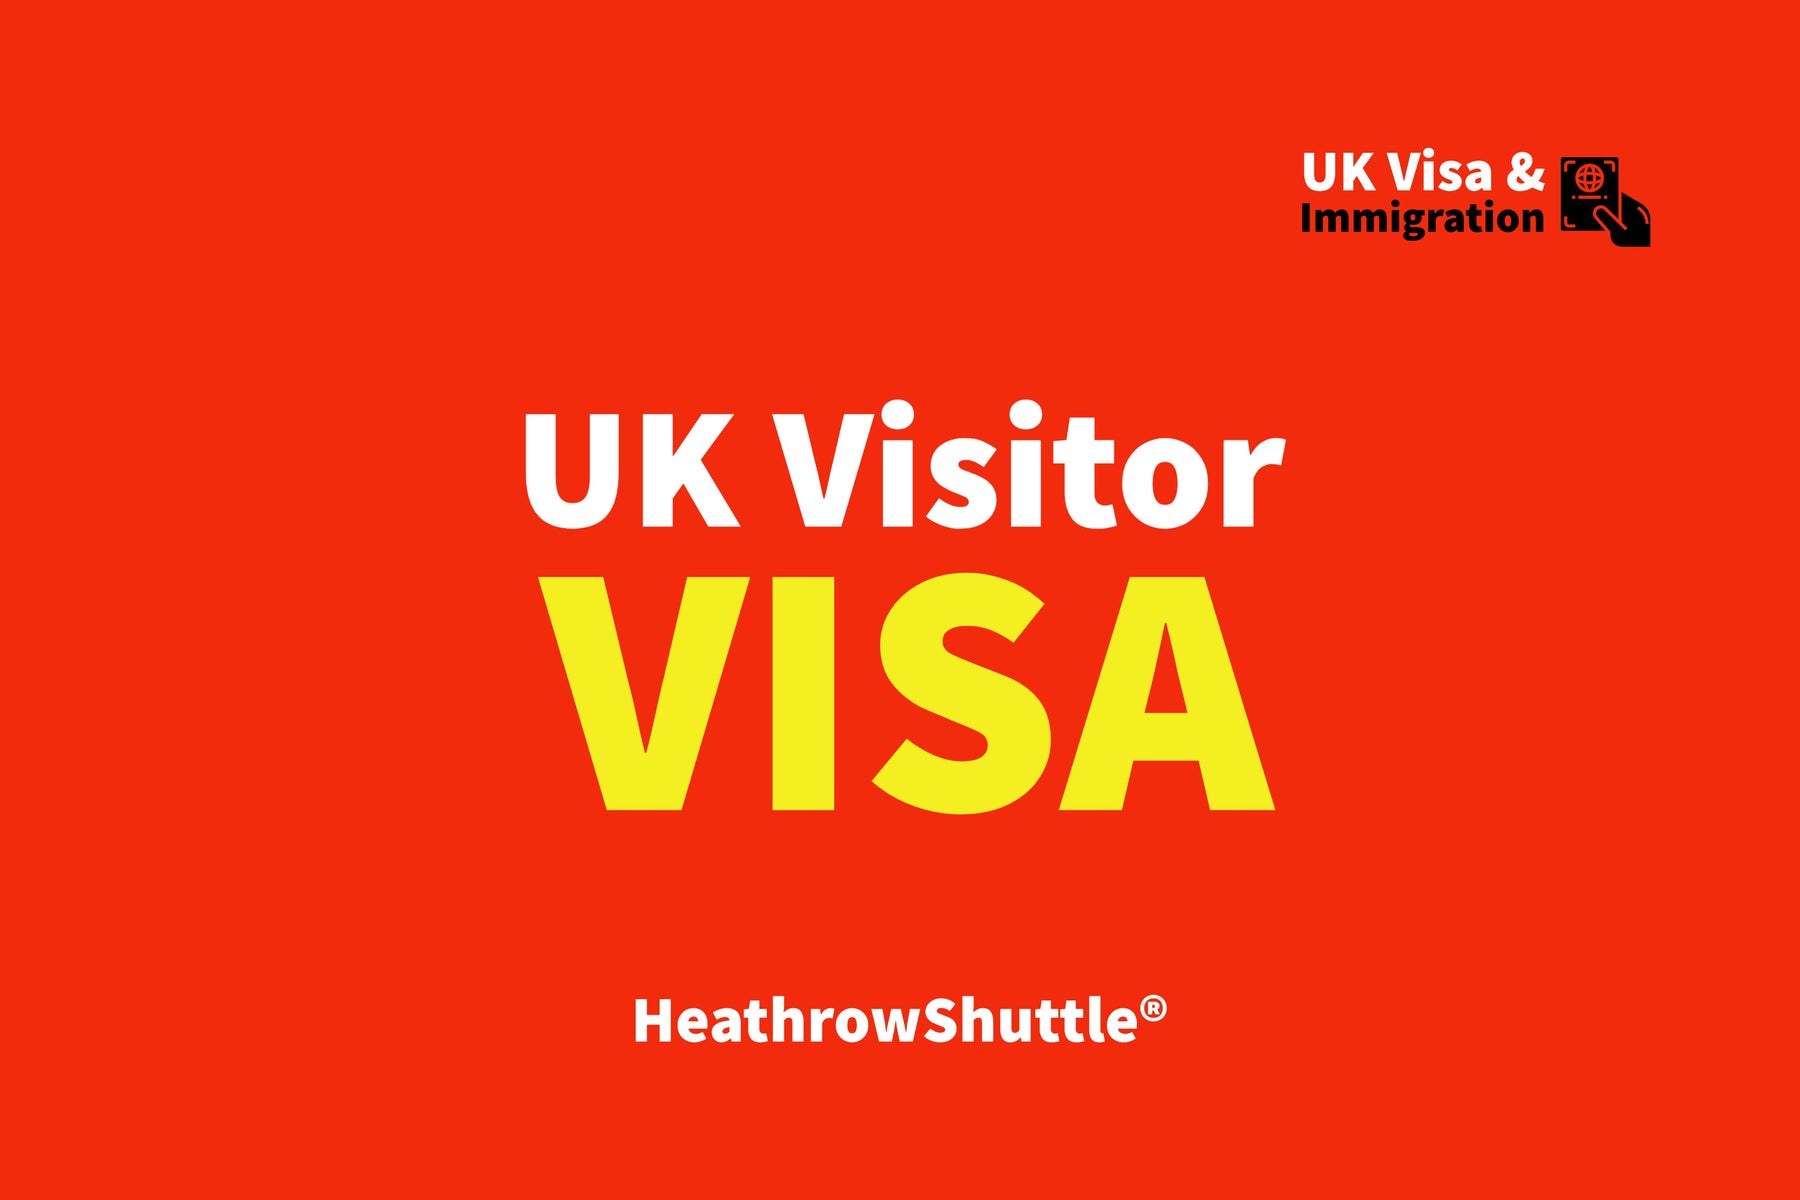 Standard Visitor Visa